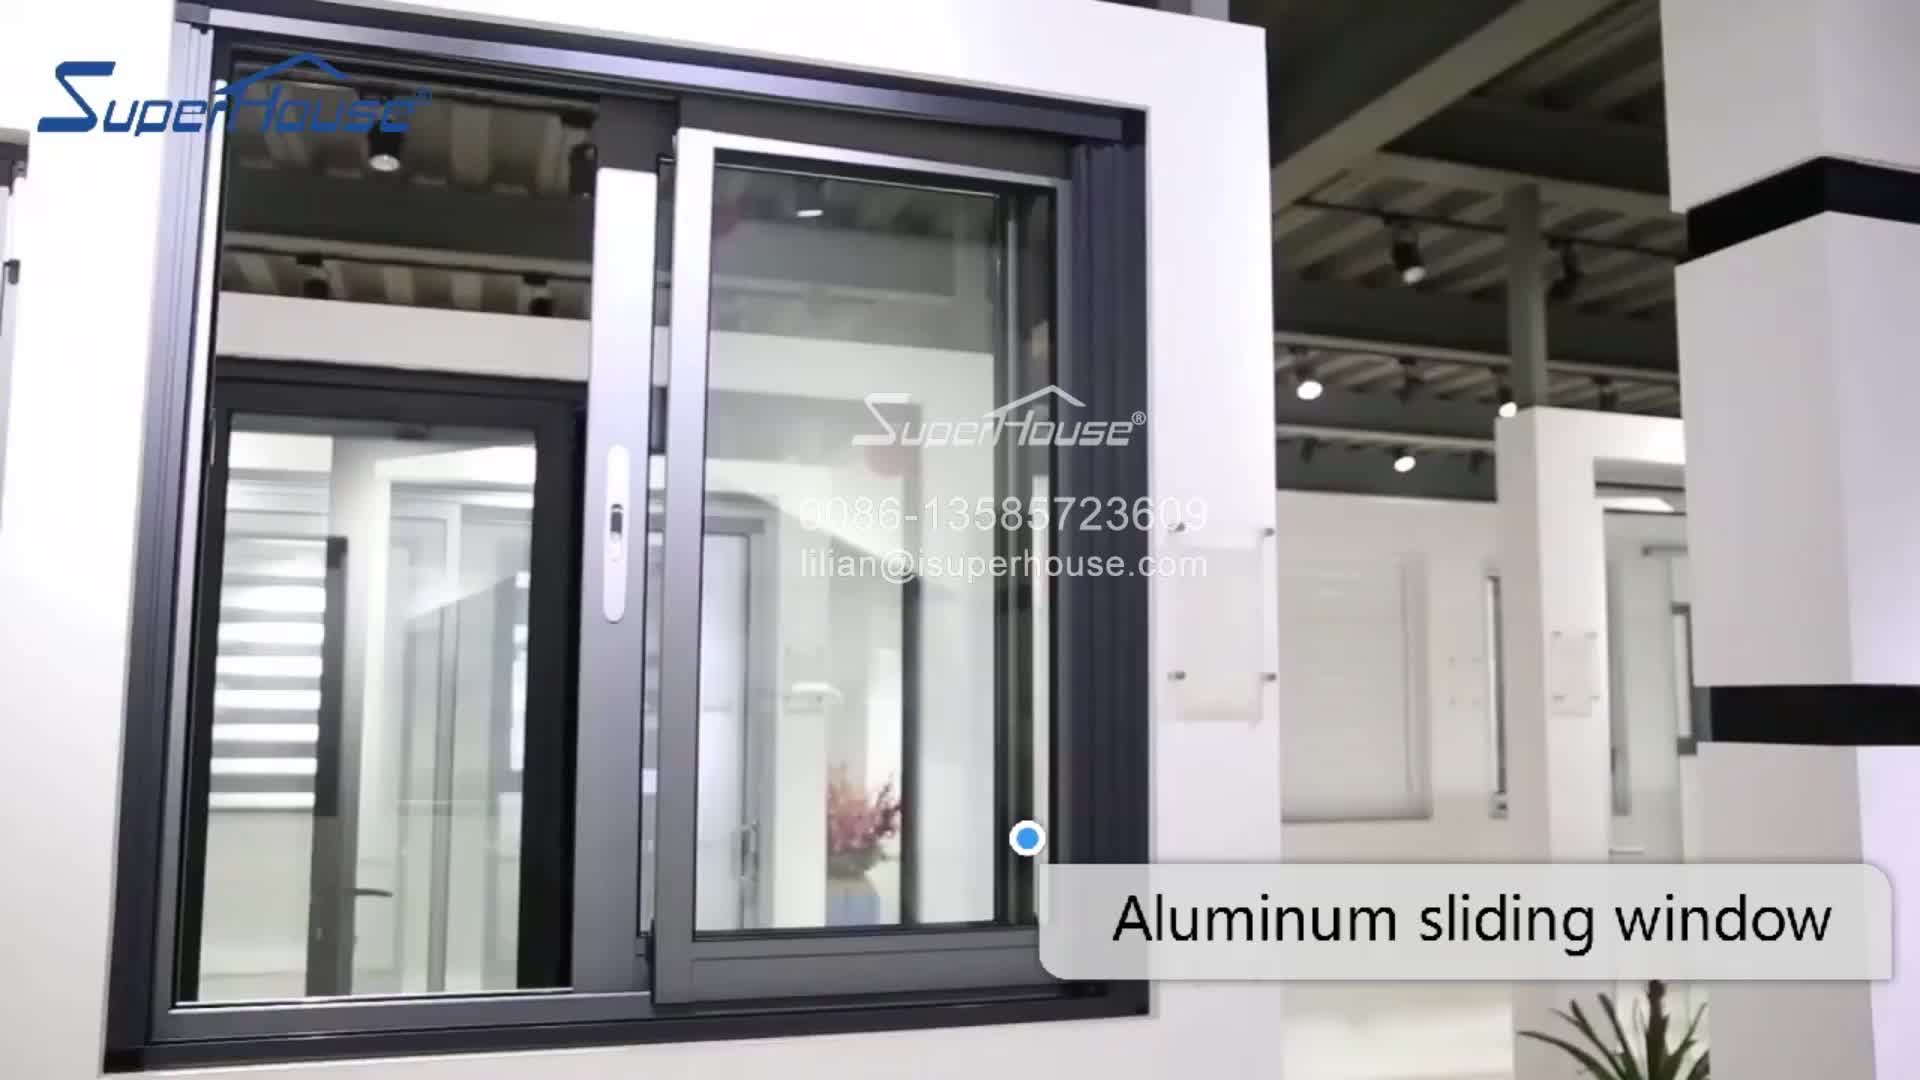 Superhouse Aluminium double pane corner window comply with AS2047 standard